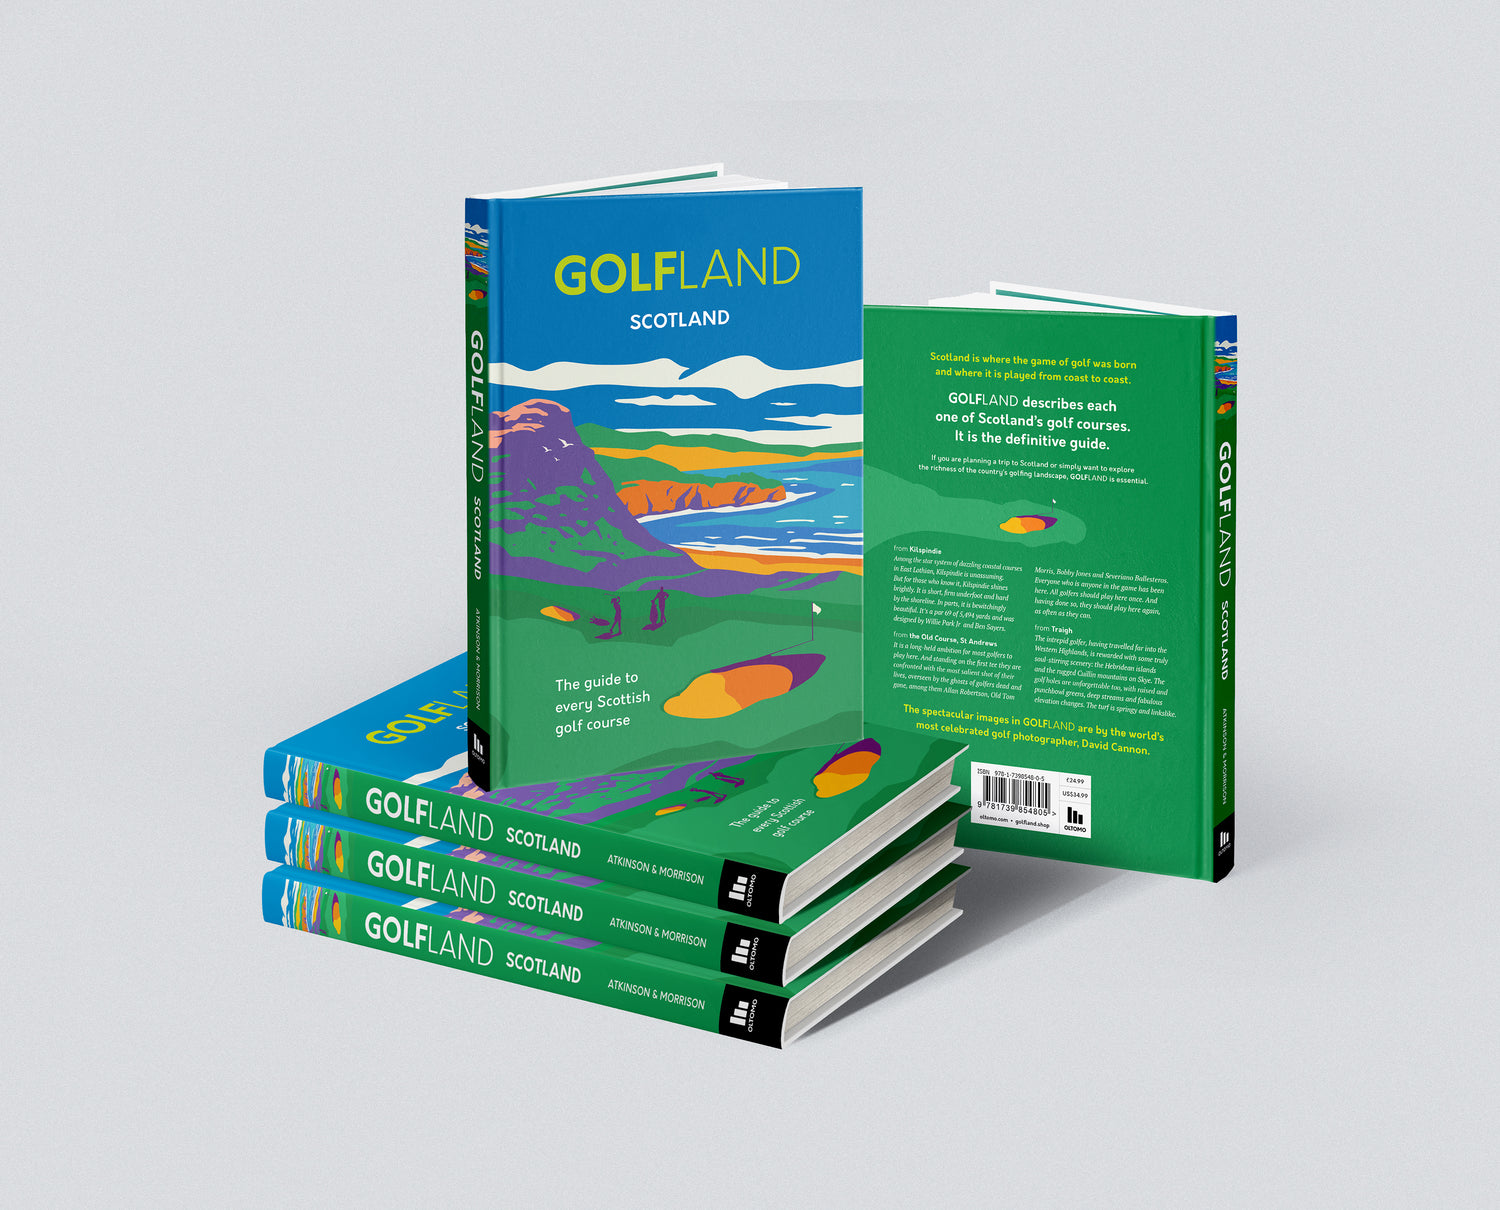 GOLFLAND - Scotland, book